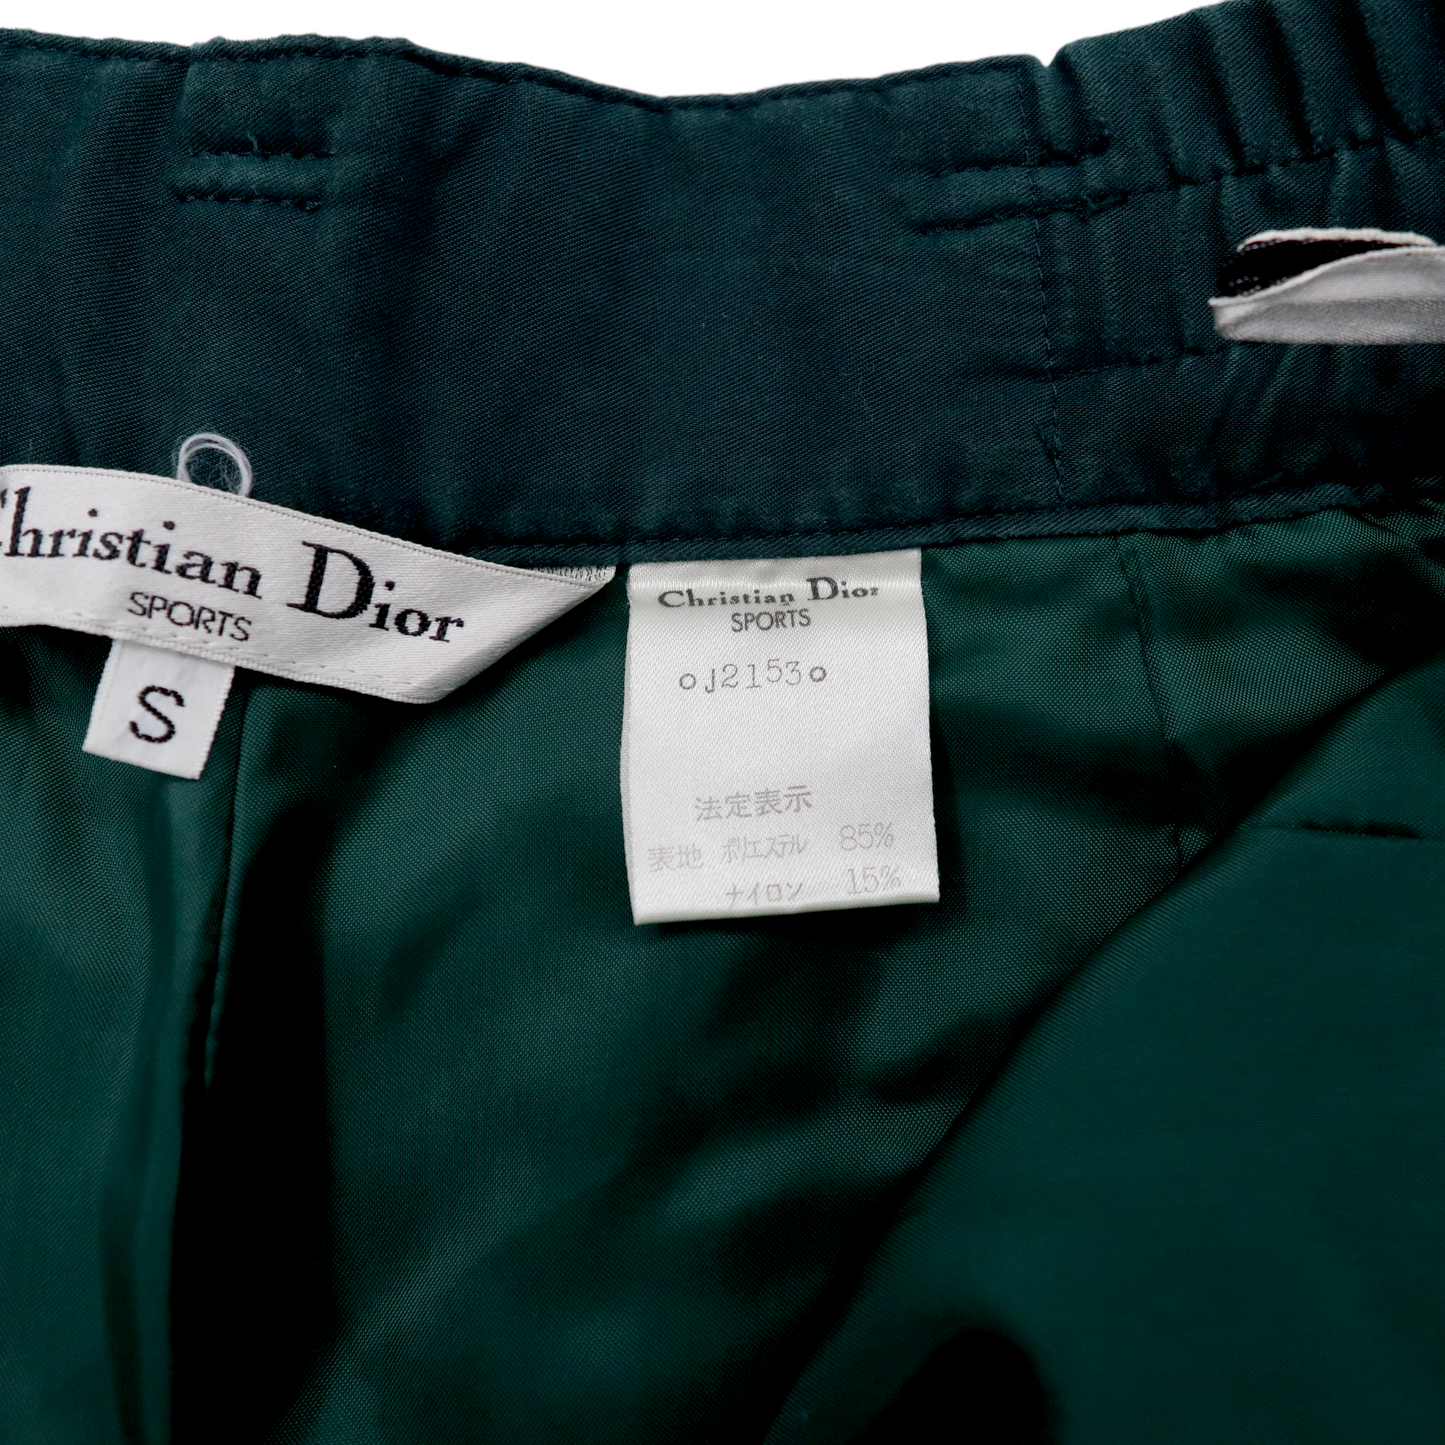 Christian Dior SPORTS テーパード パラシュートパンツ S グリーン 玉虫色 ポリエステル オールド